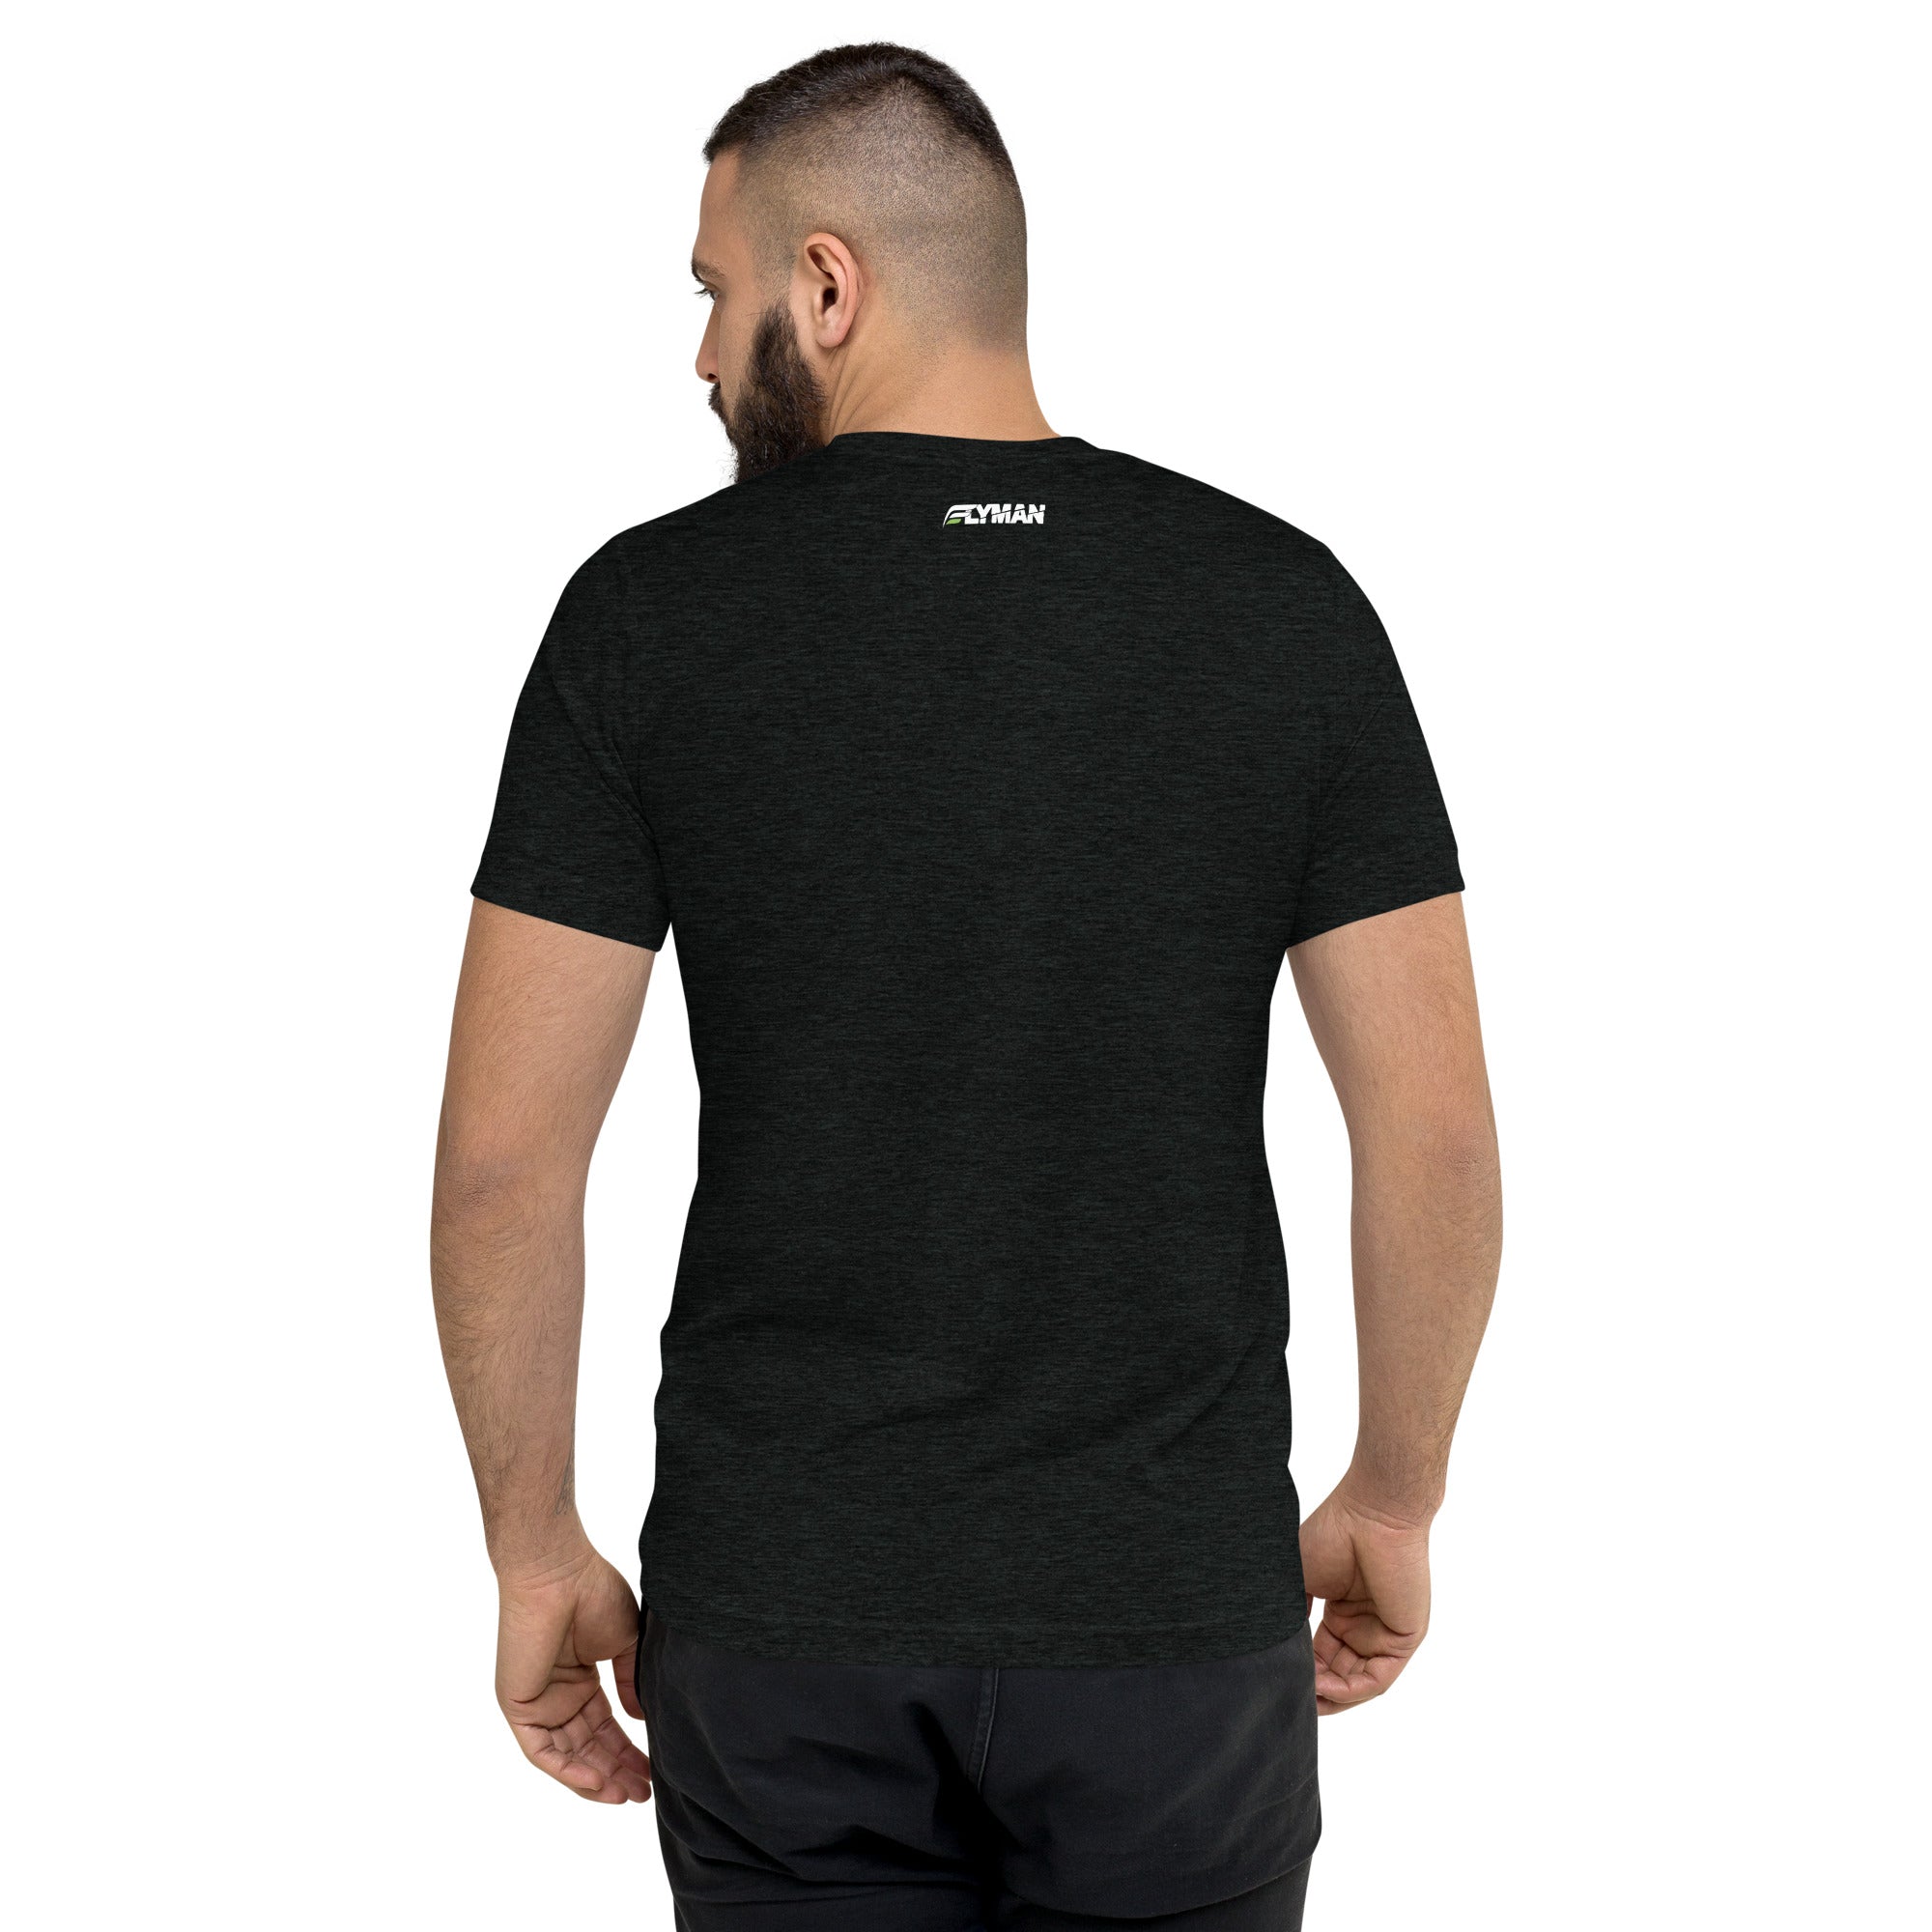 Flyman Men's Short sleeve t-shirt